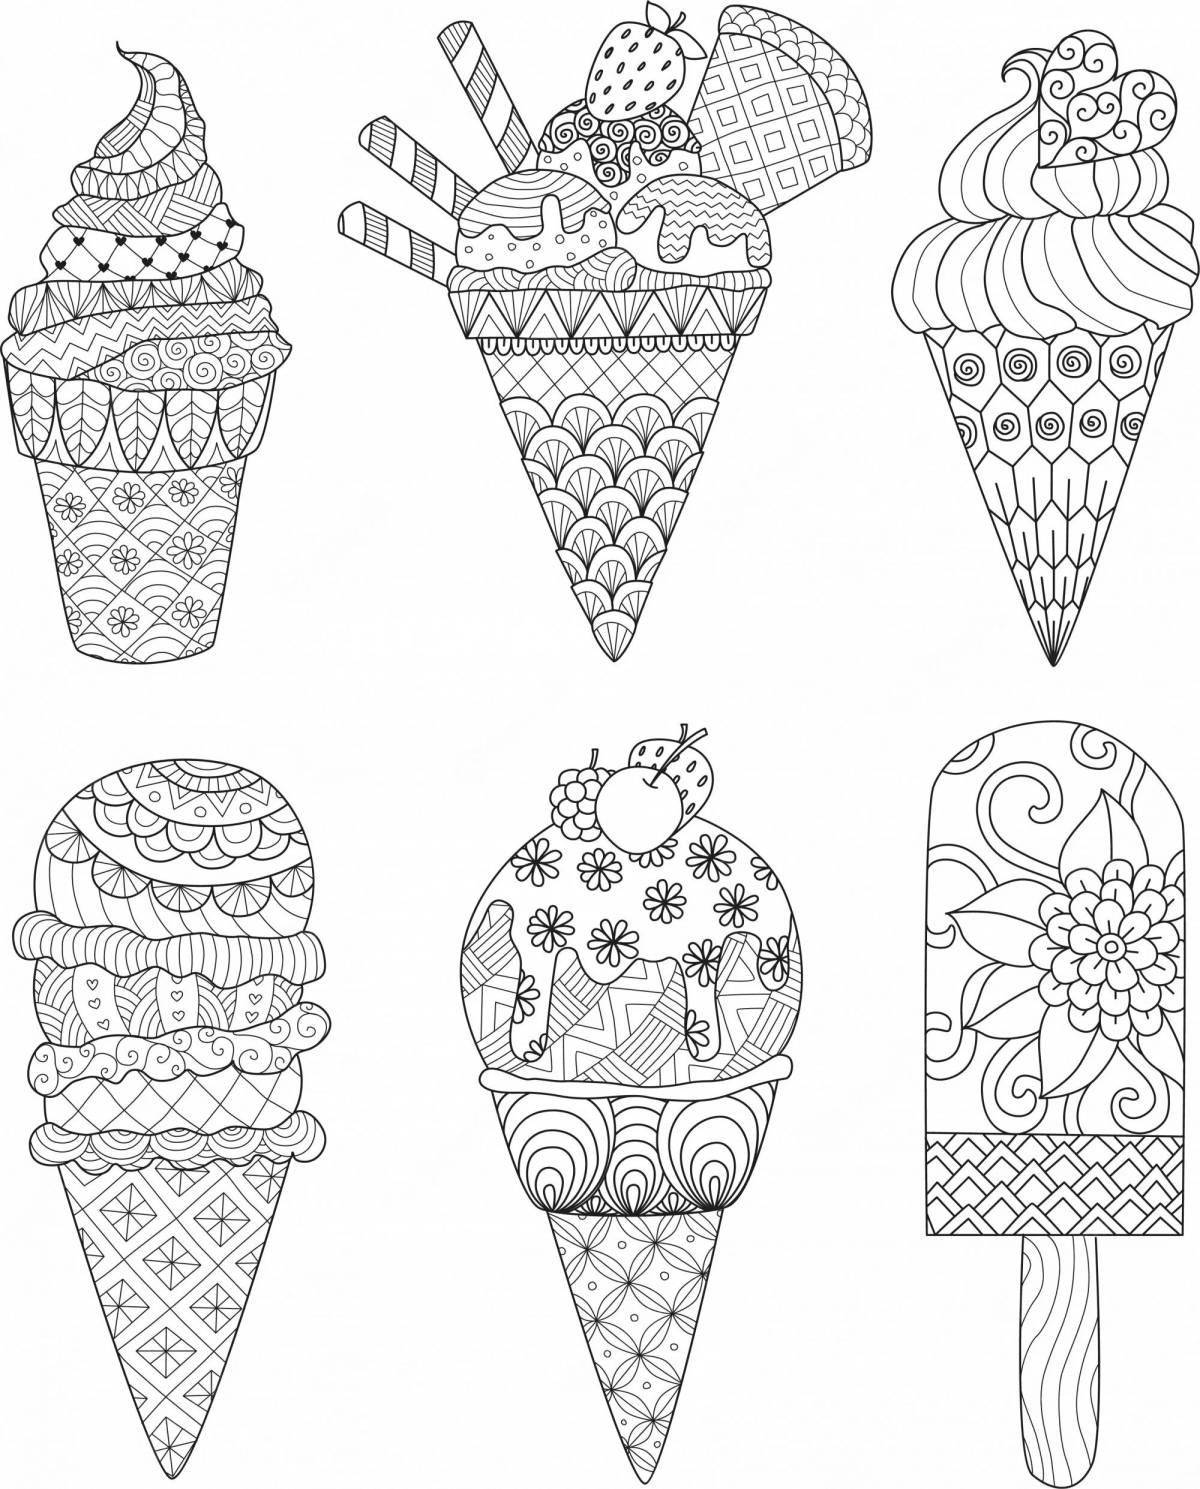 Joyful anti-stress ice cream coloring book